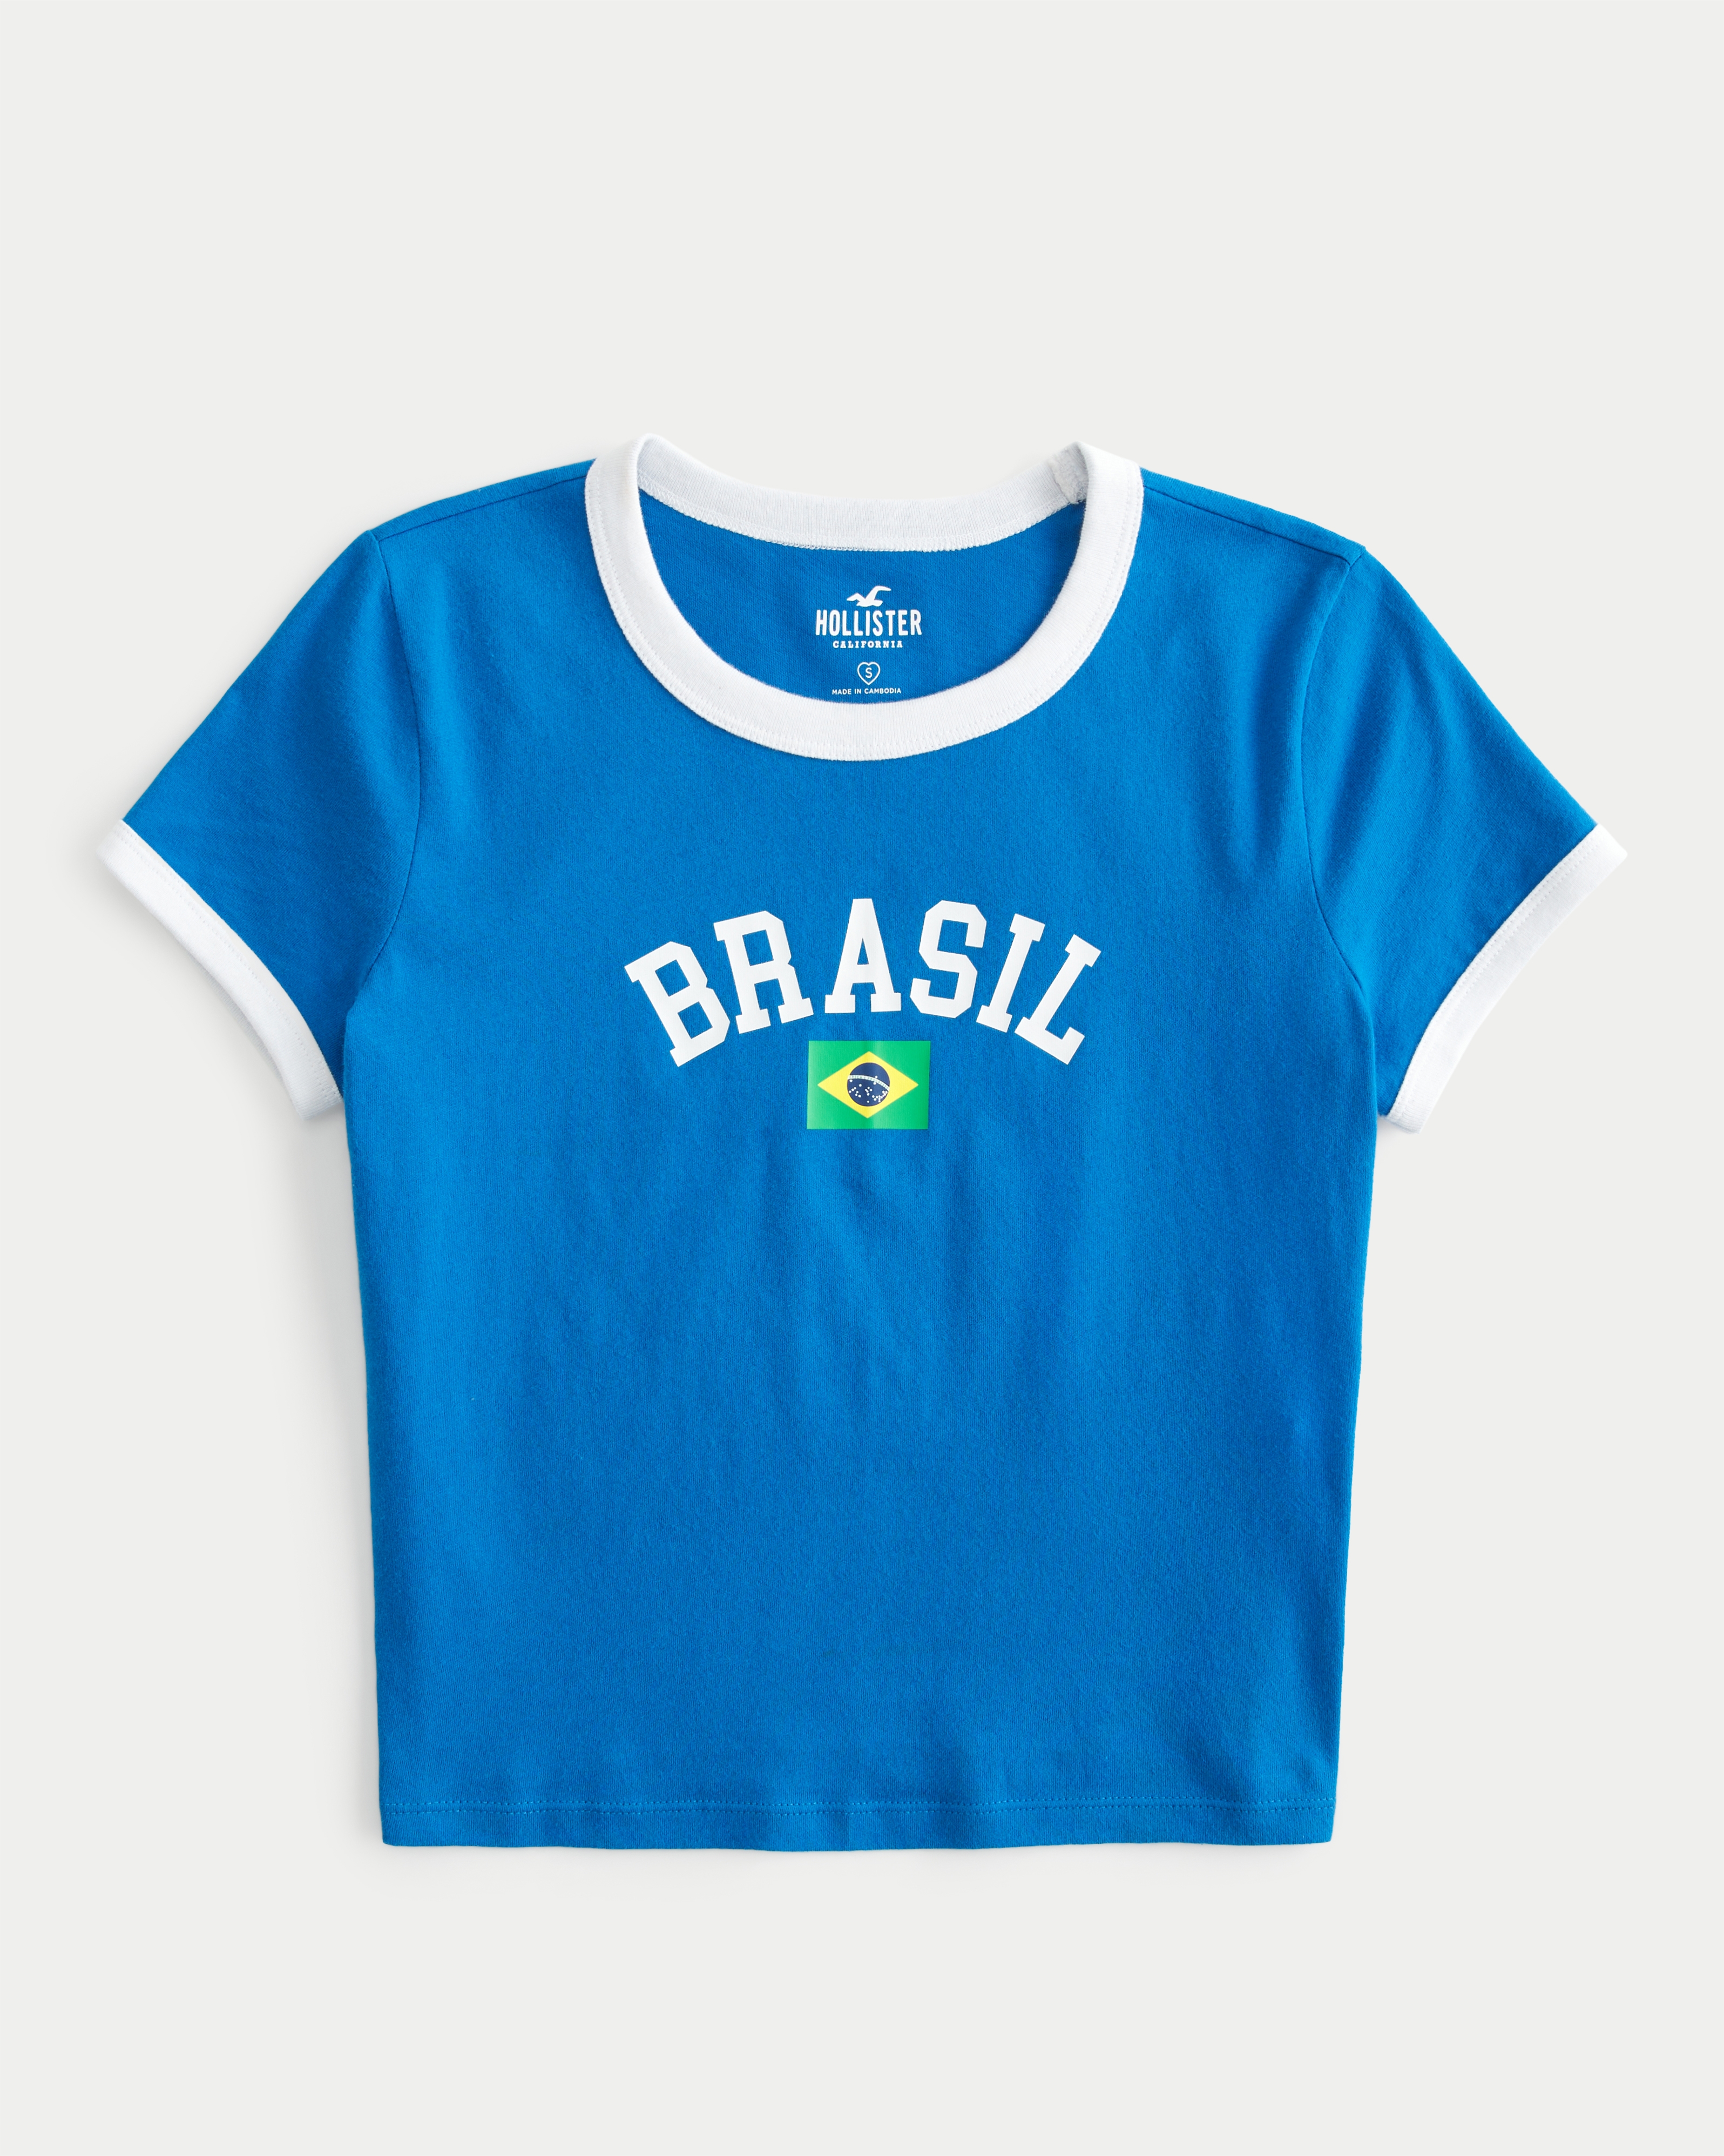 Hollister Brasil Graphic Baby Tee